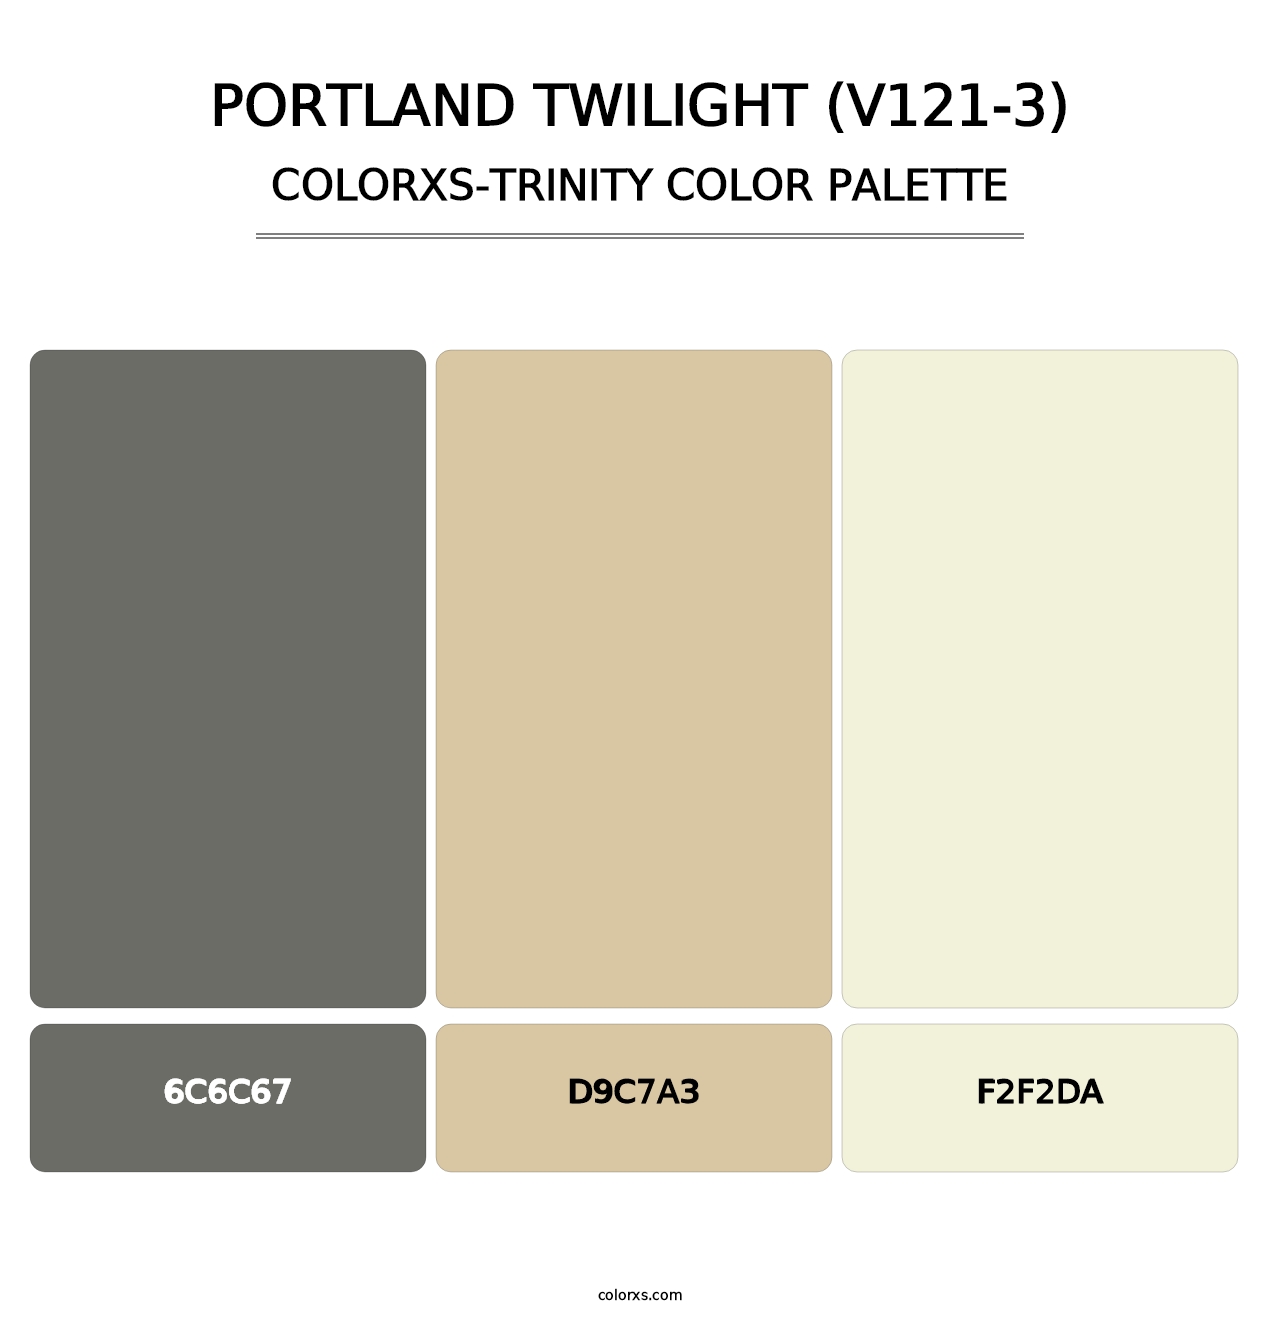 Portland Twilight (V121-3) - Colorxs Trinity Palette